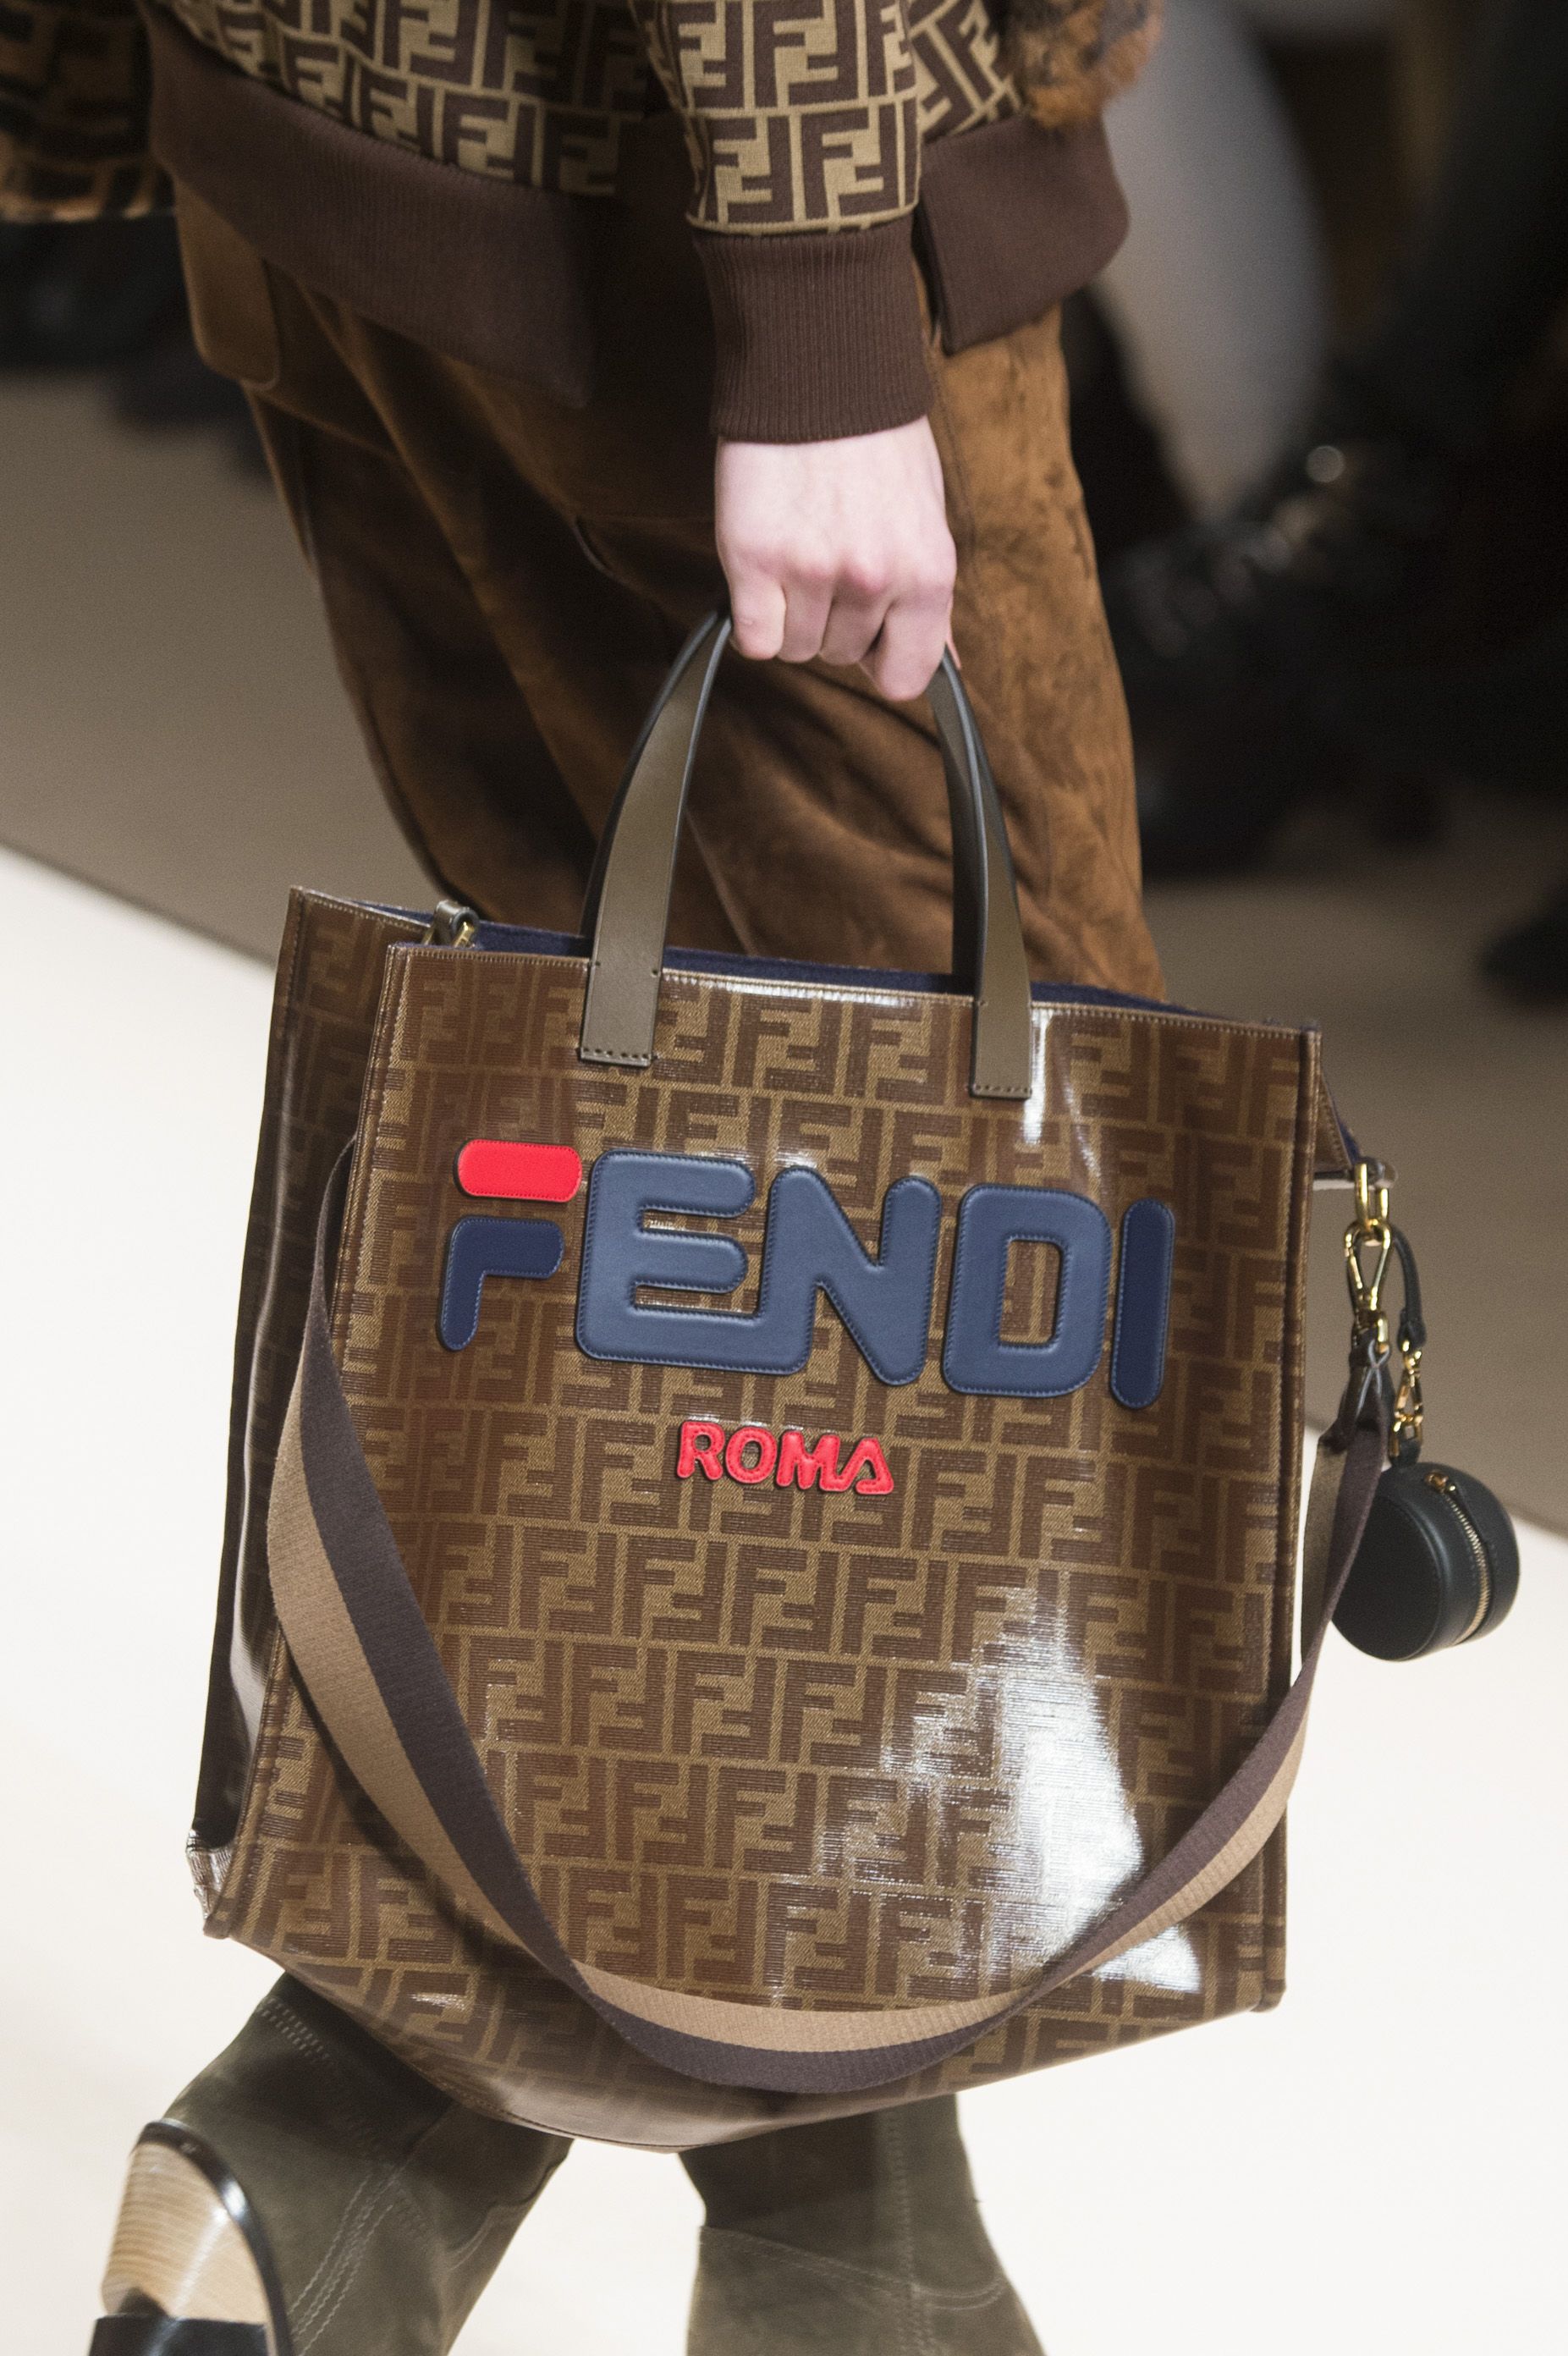 Celebrities are bringing back the Fendi logo trend